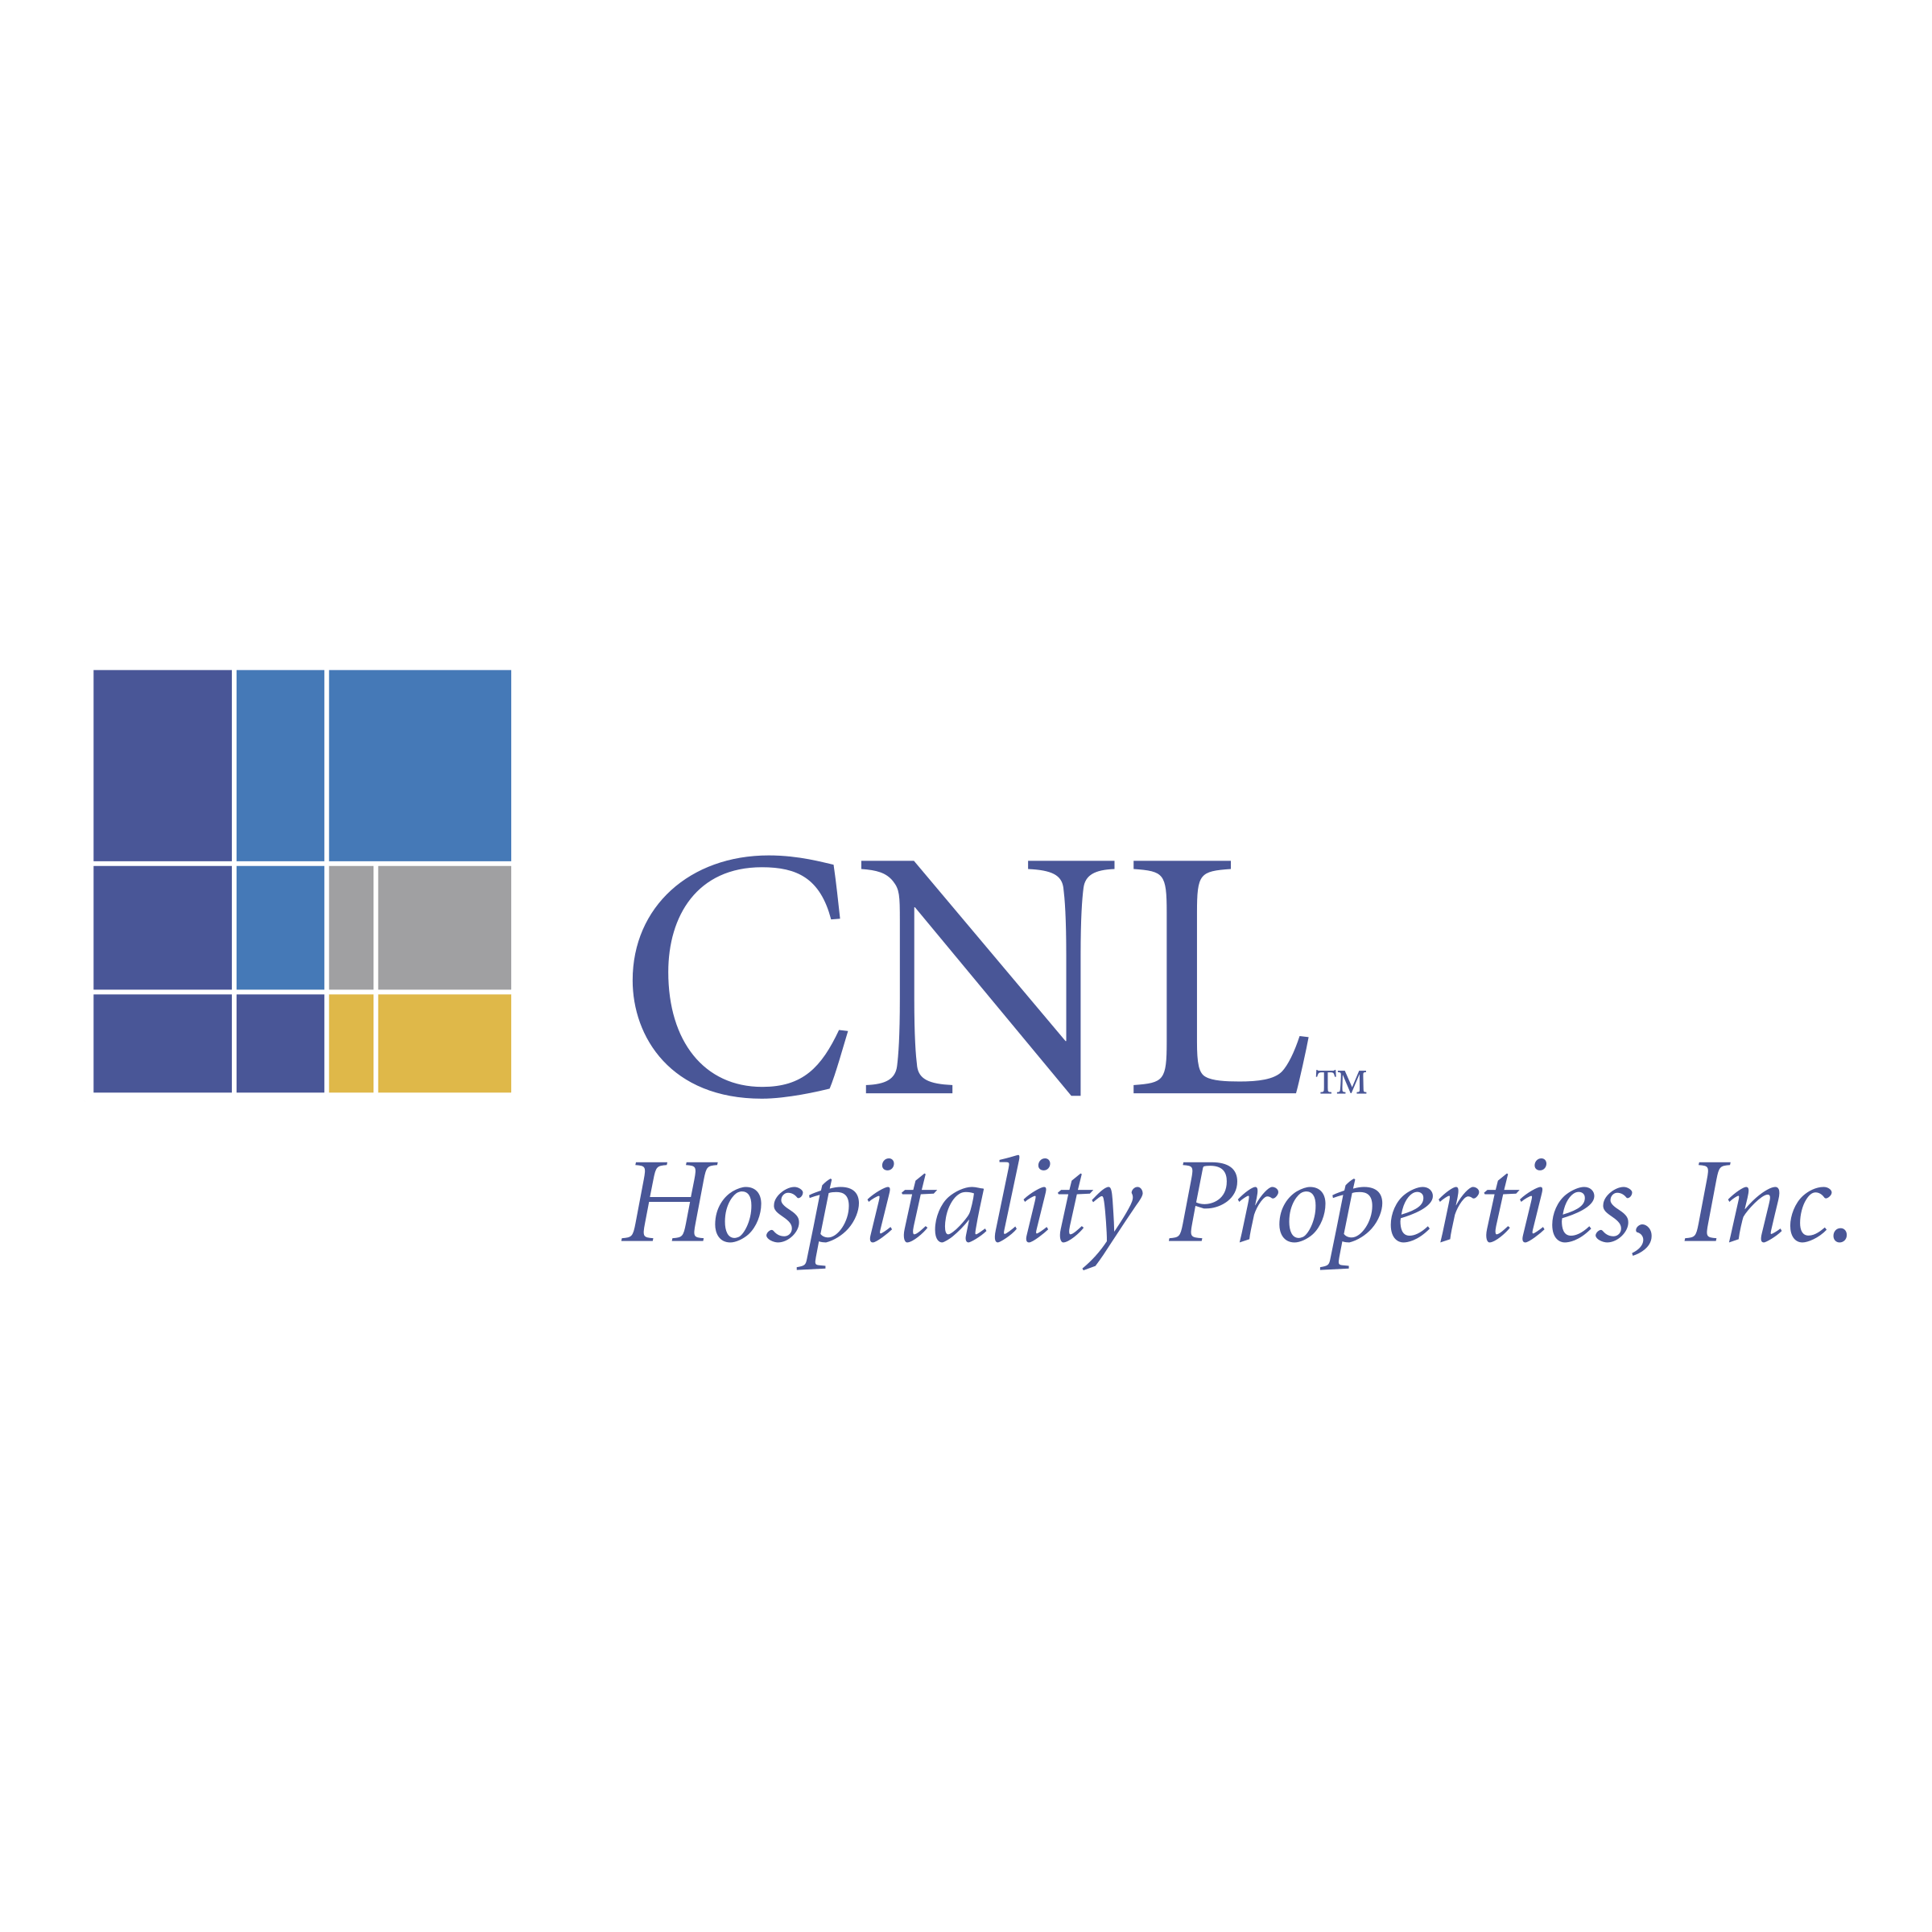 CNL Logo - CNL Hospitality Properties Logo PNG Transparent & SVG Vector ...